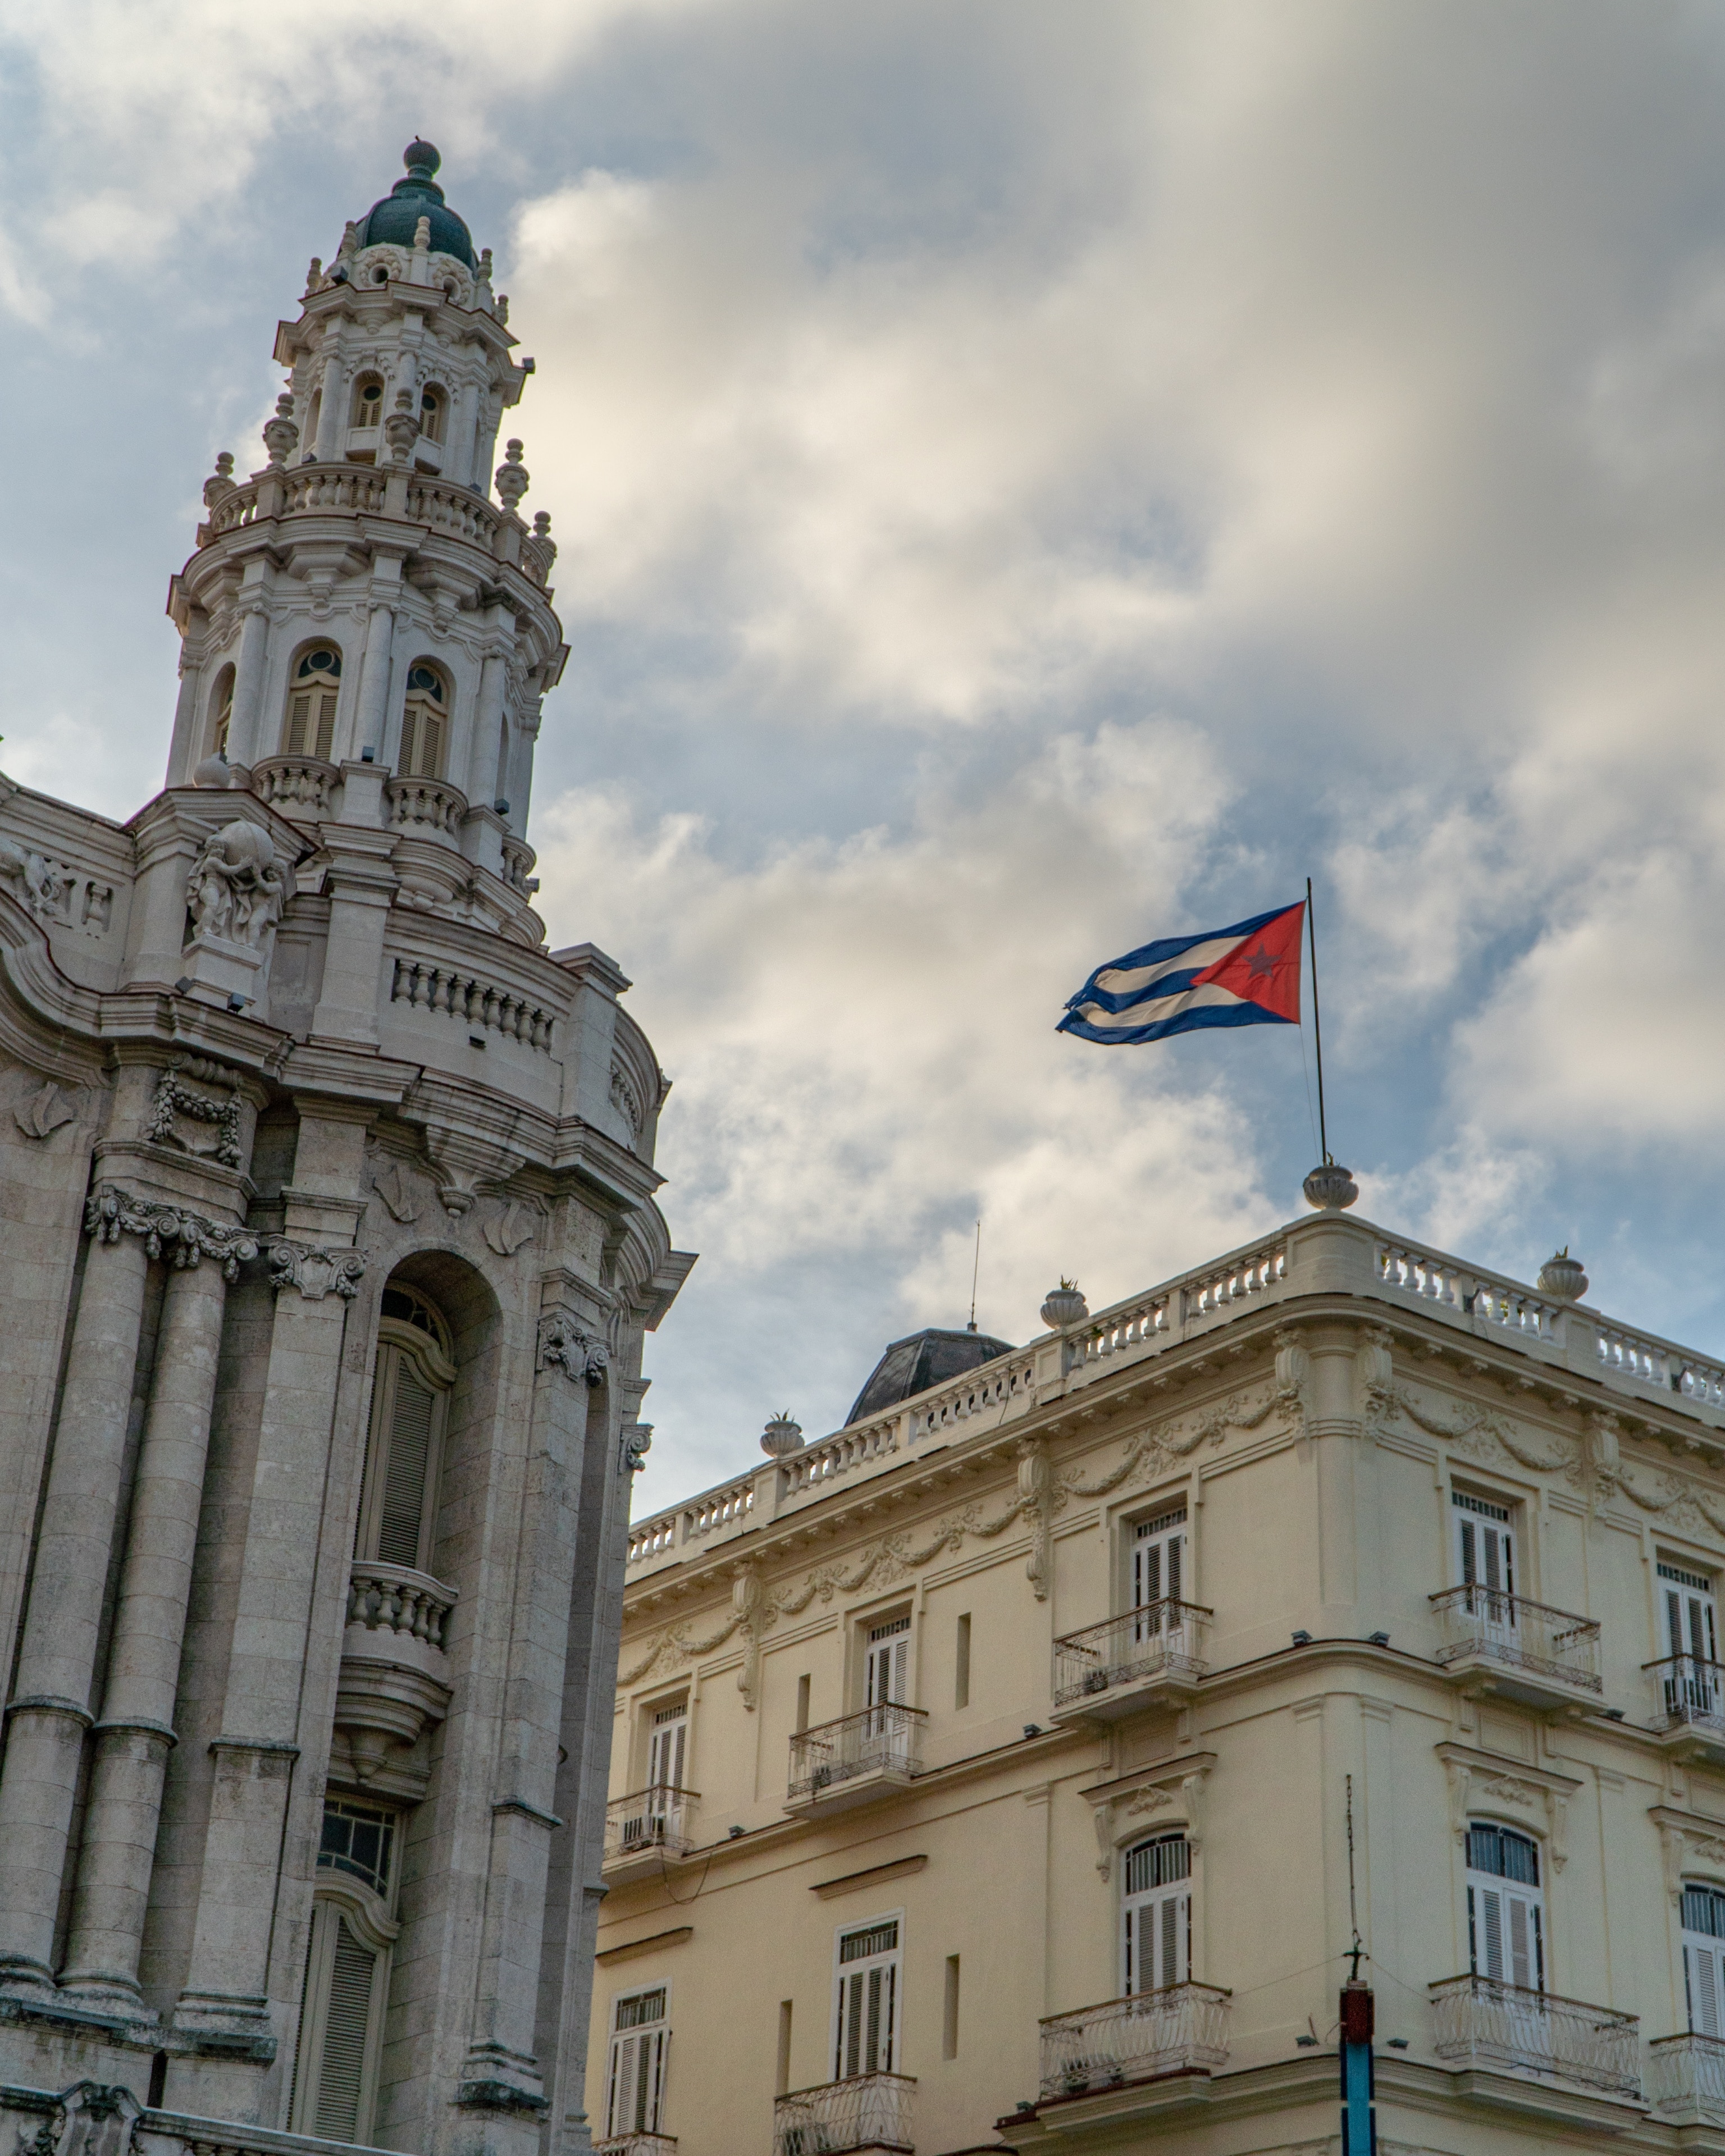 Cuba Libre!

#TroveOnTuesday #cuba #havana